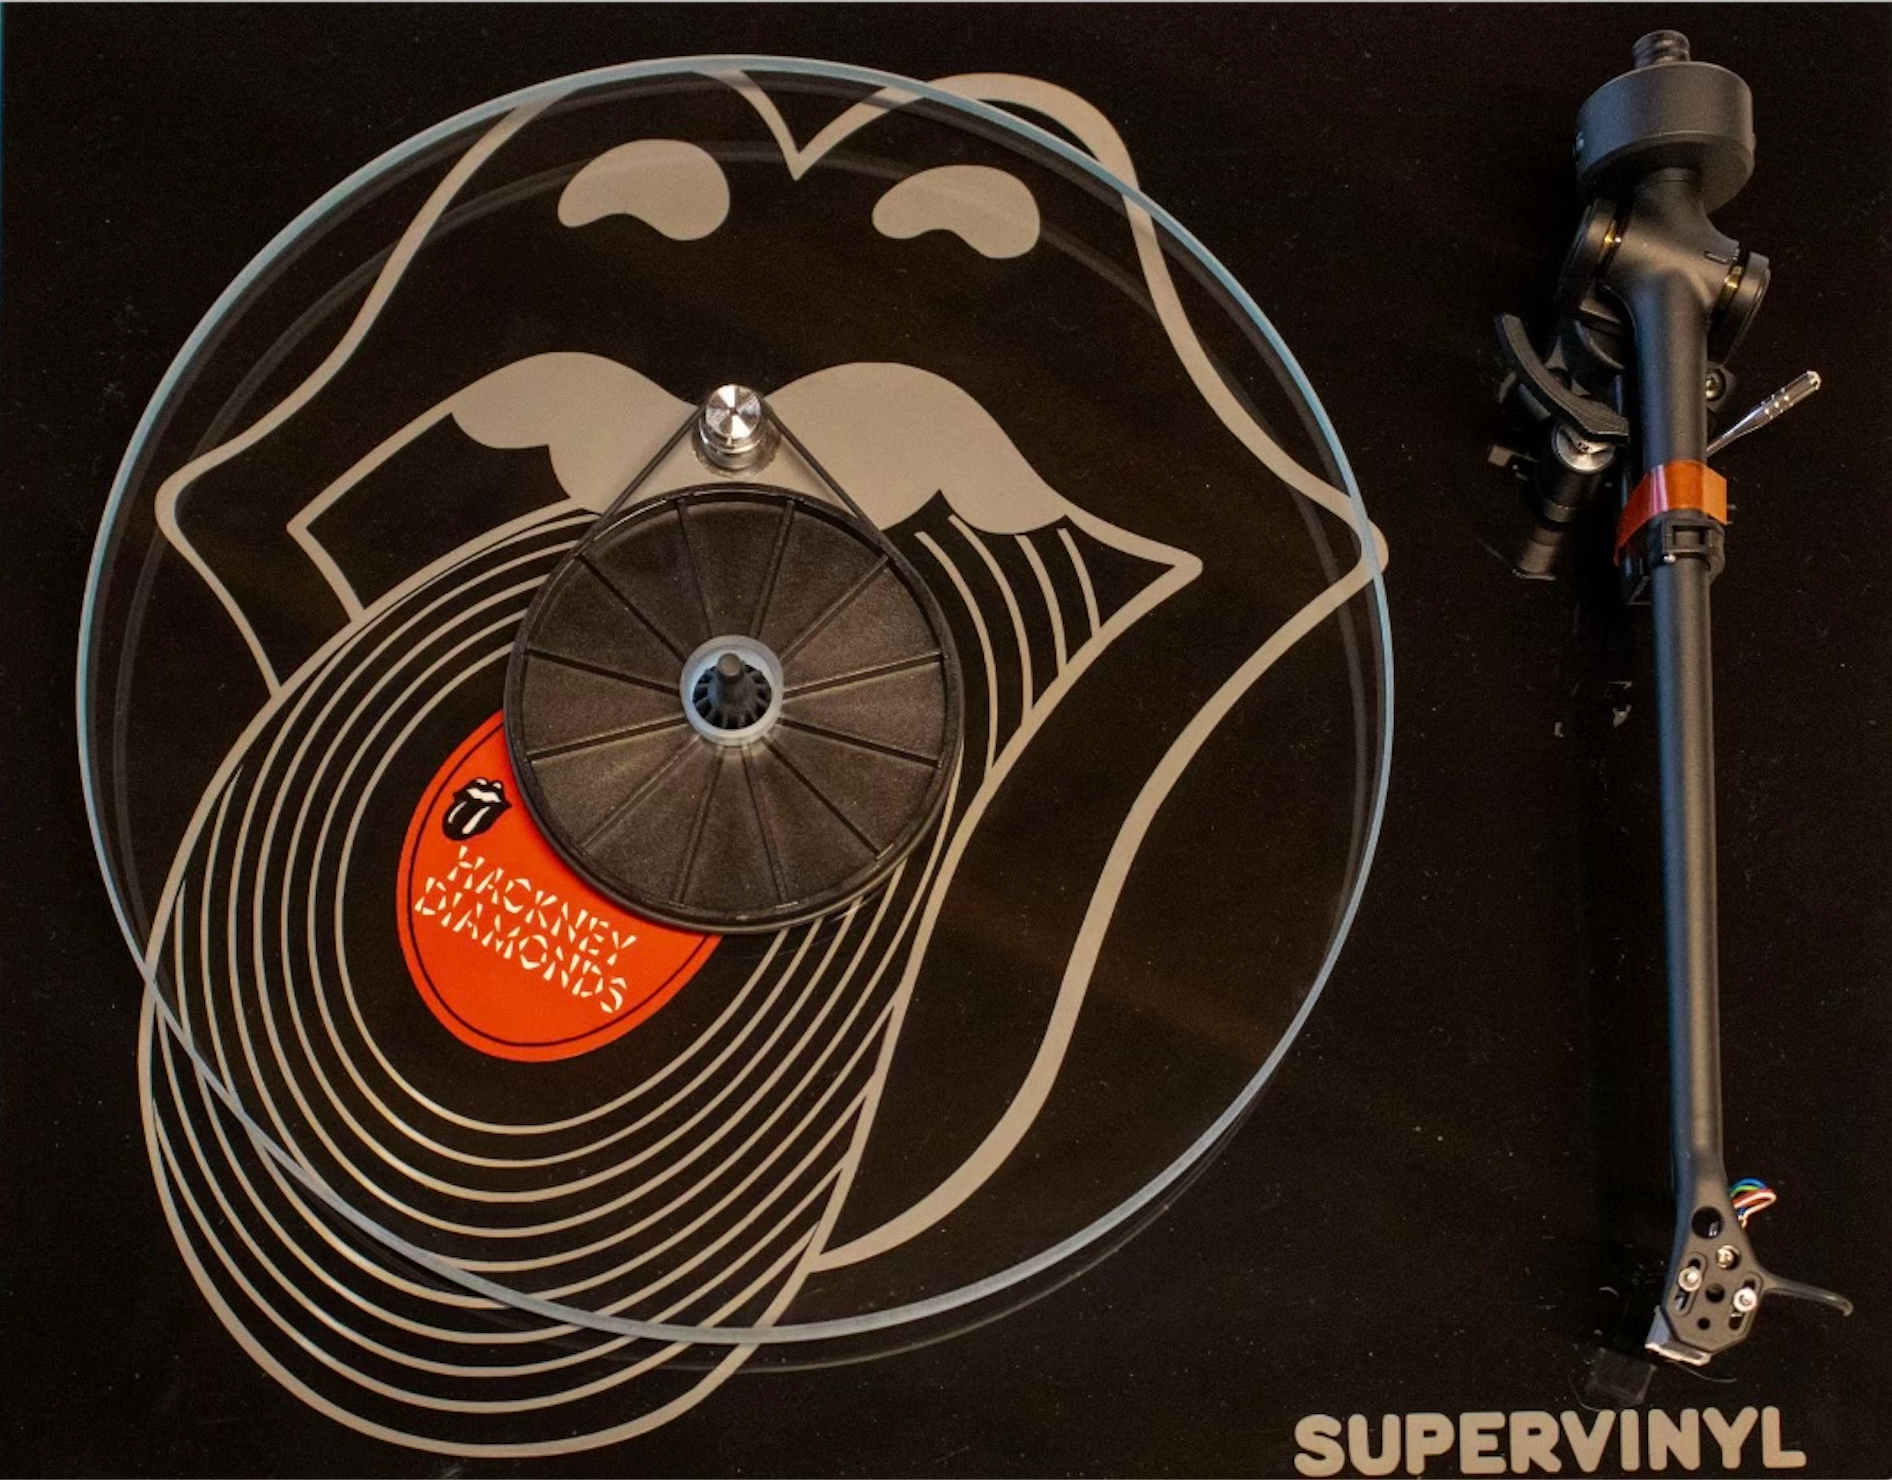 Rolling Stones x SUPERVINYL "Hackney Diamonds" Custom Turntable